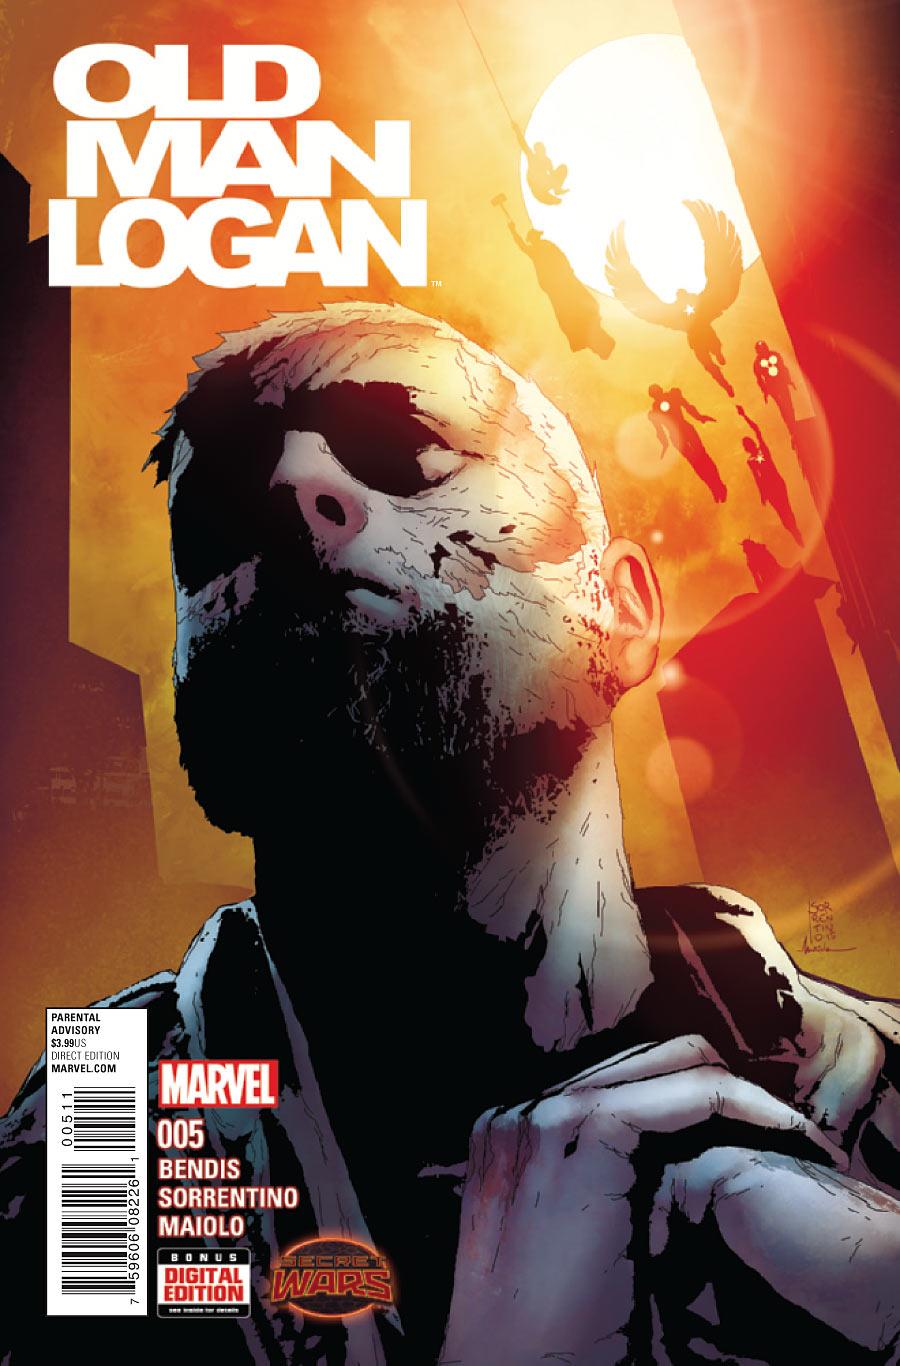 Old Man Logan Vol. 1 #5